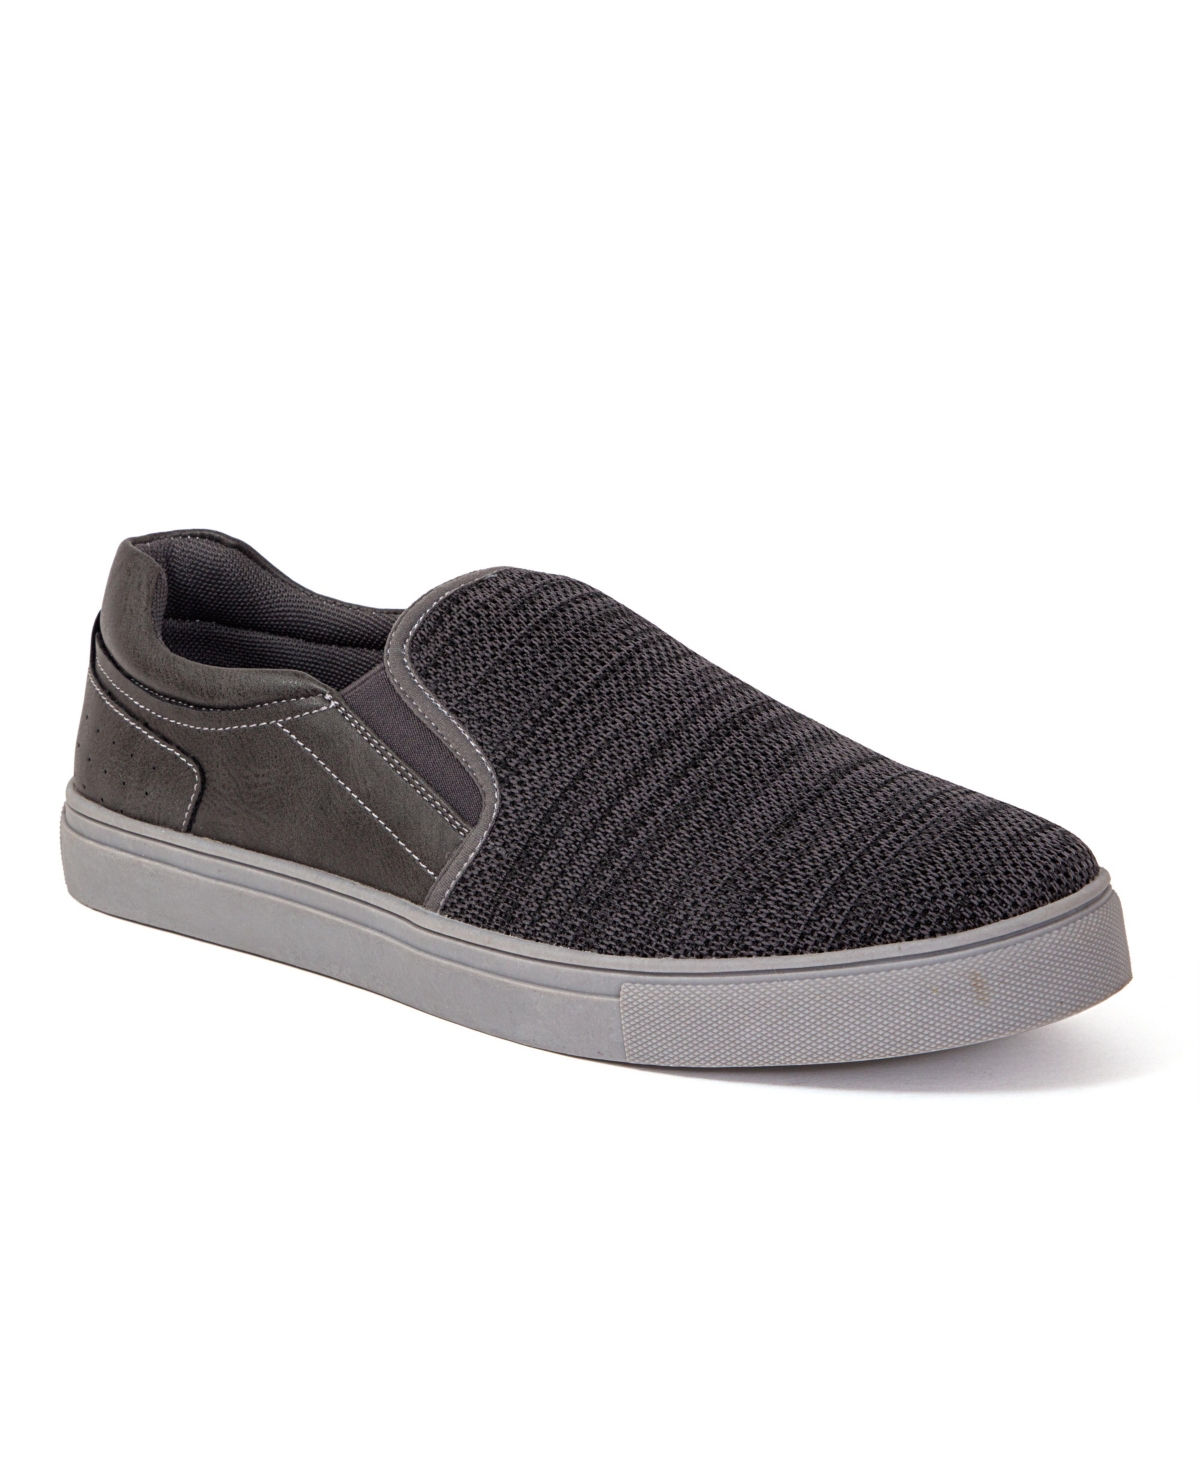 Men's Bryce Comfort Slip-On Fashion Sneakers - Dark Gray